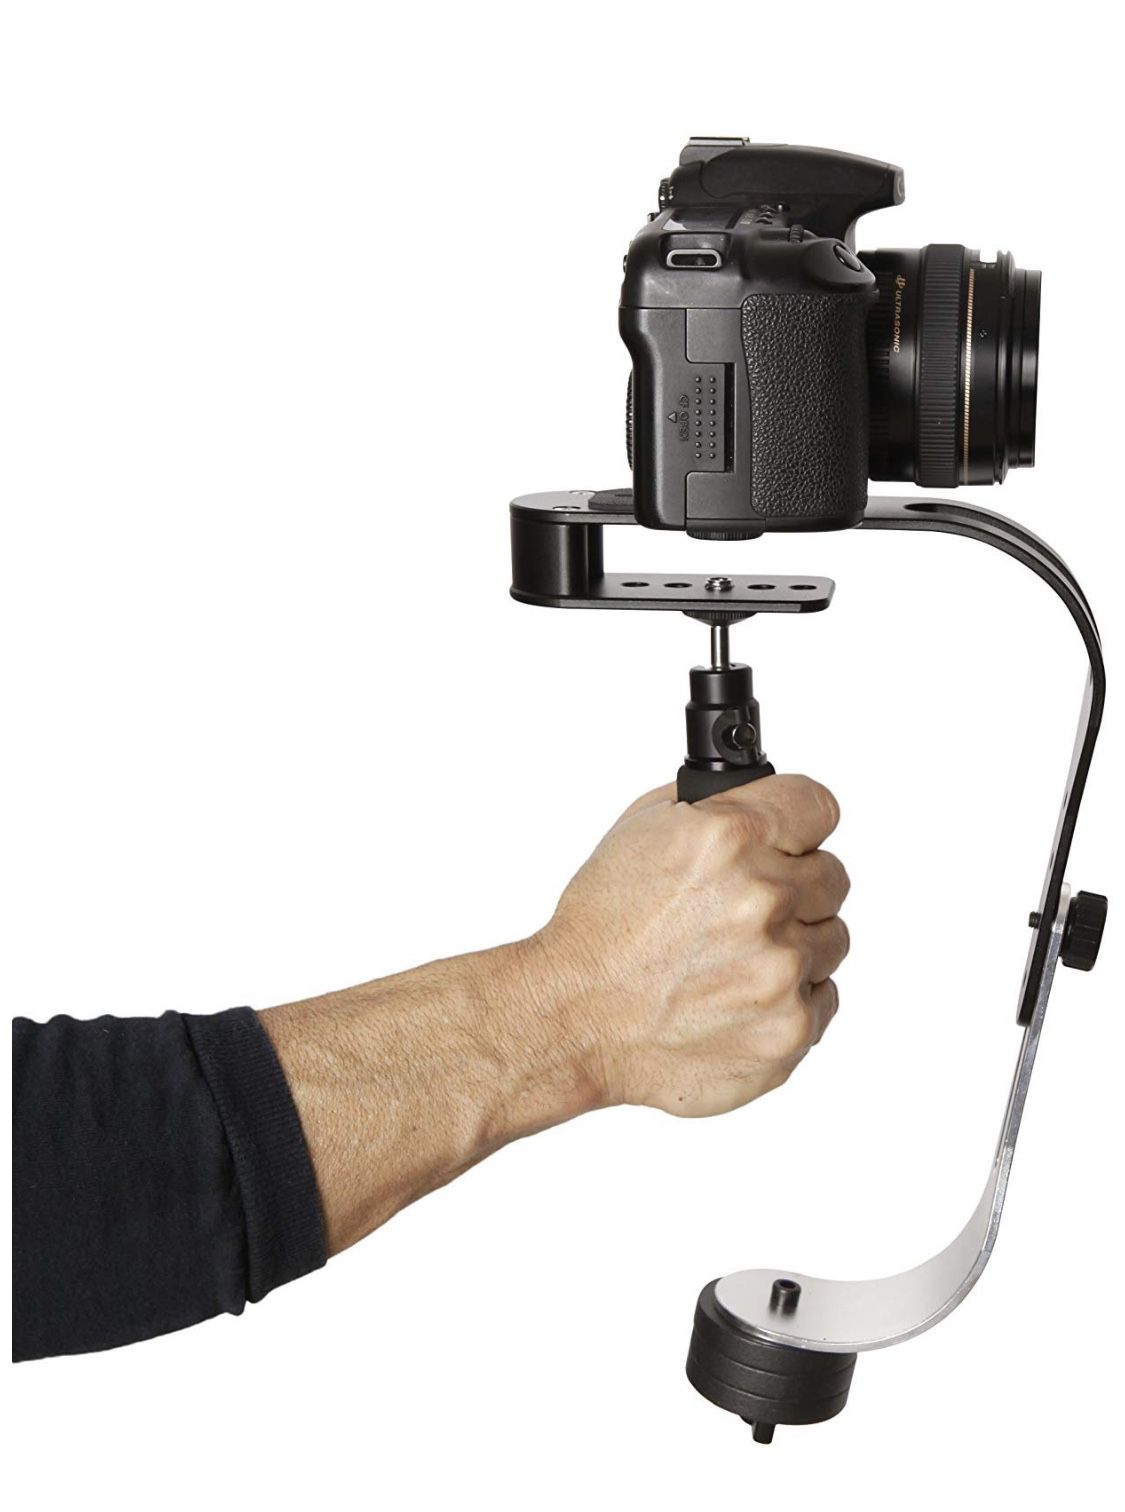 ROXANT PRO Video Camera stabilizer Limited Edition (Midnight Black)